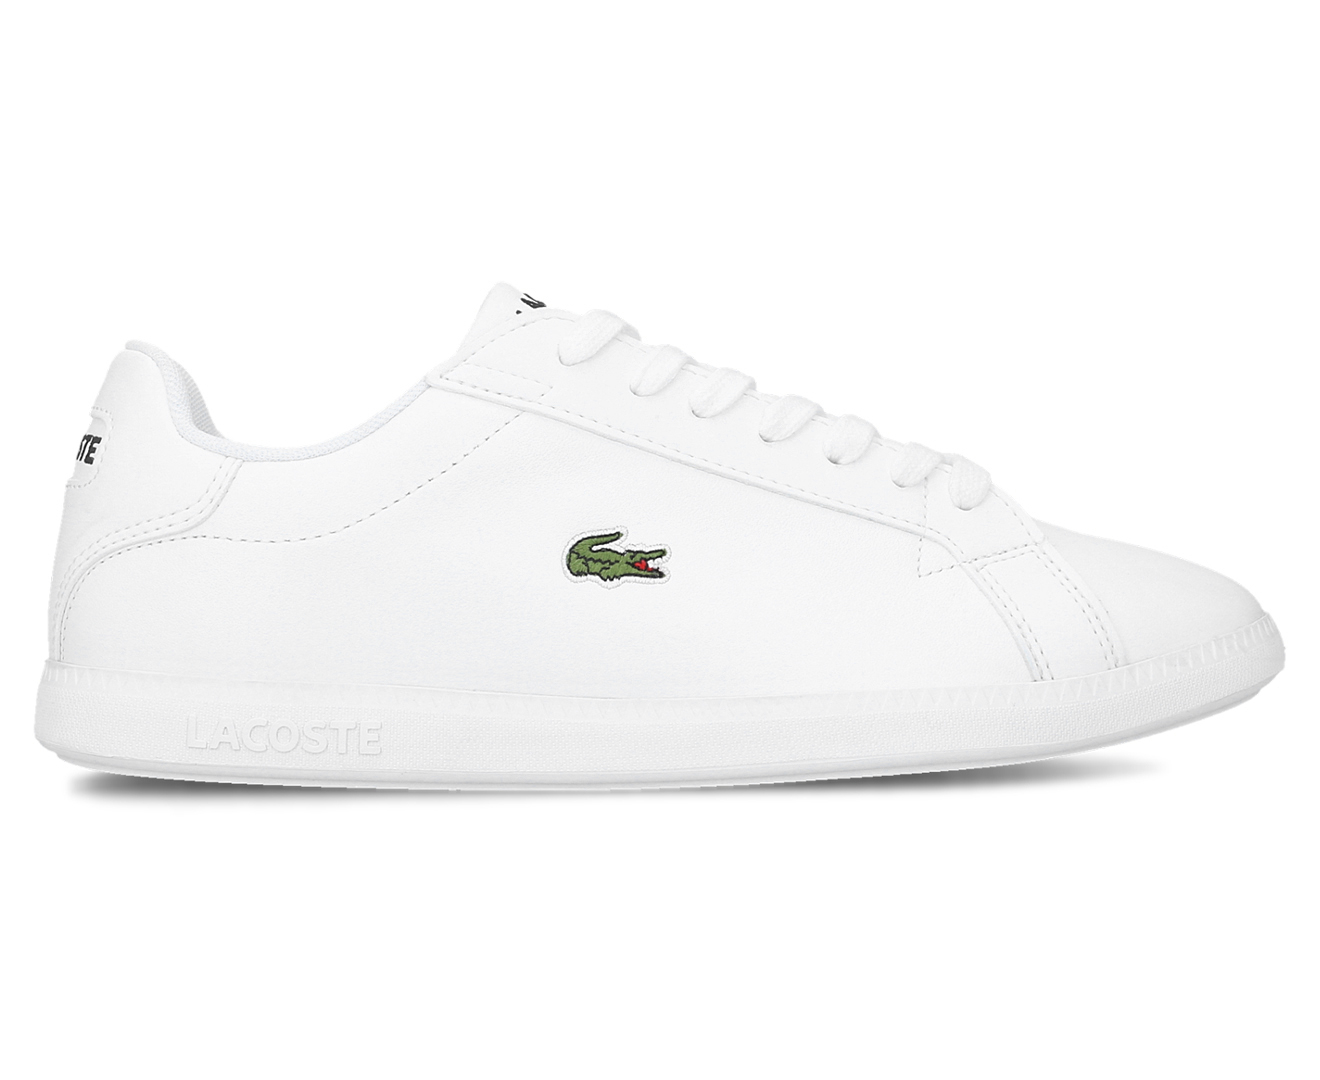 Lacoste Women's Graduate Bl 1 Leather Sneakers - White | Catch.com.au